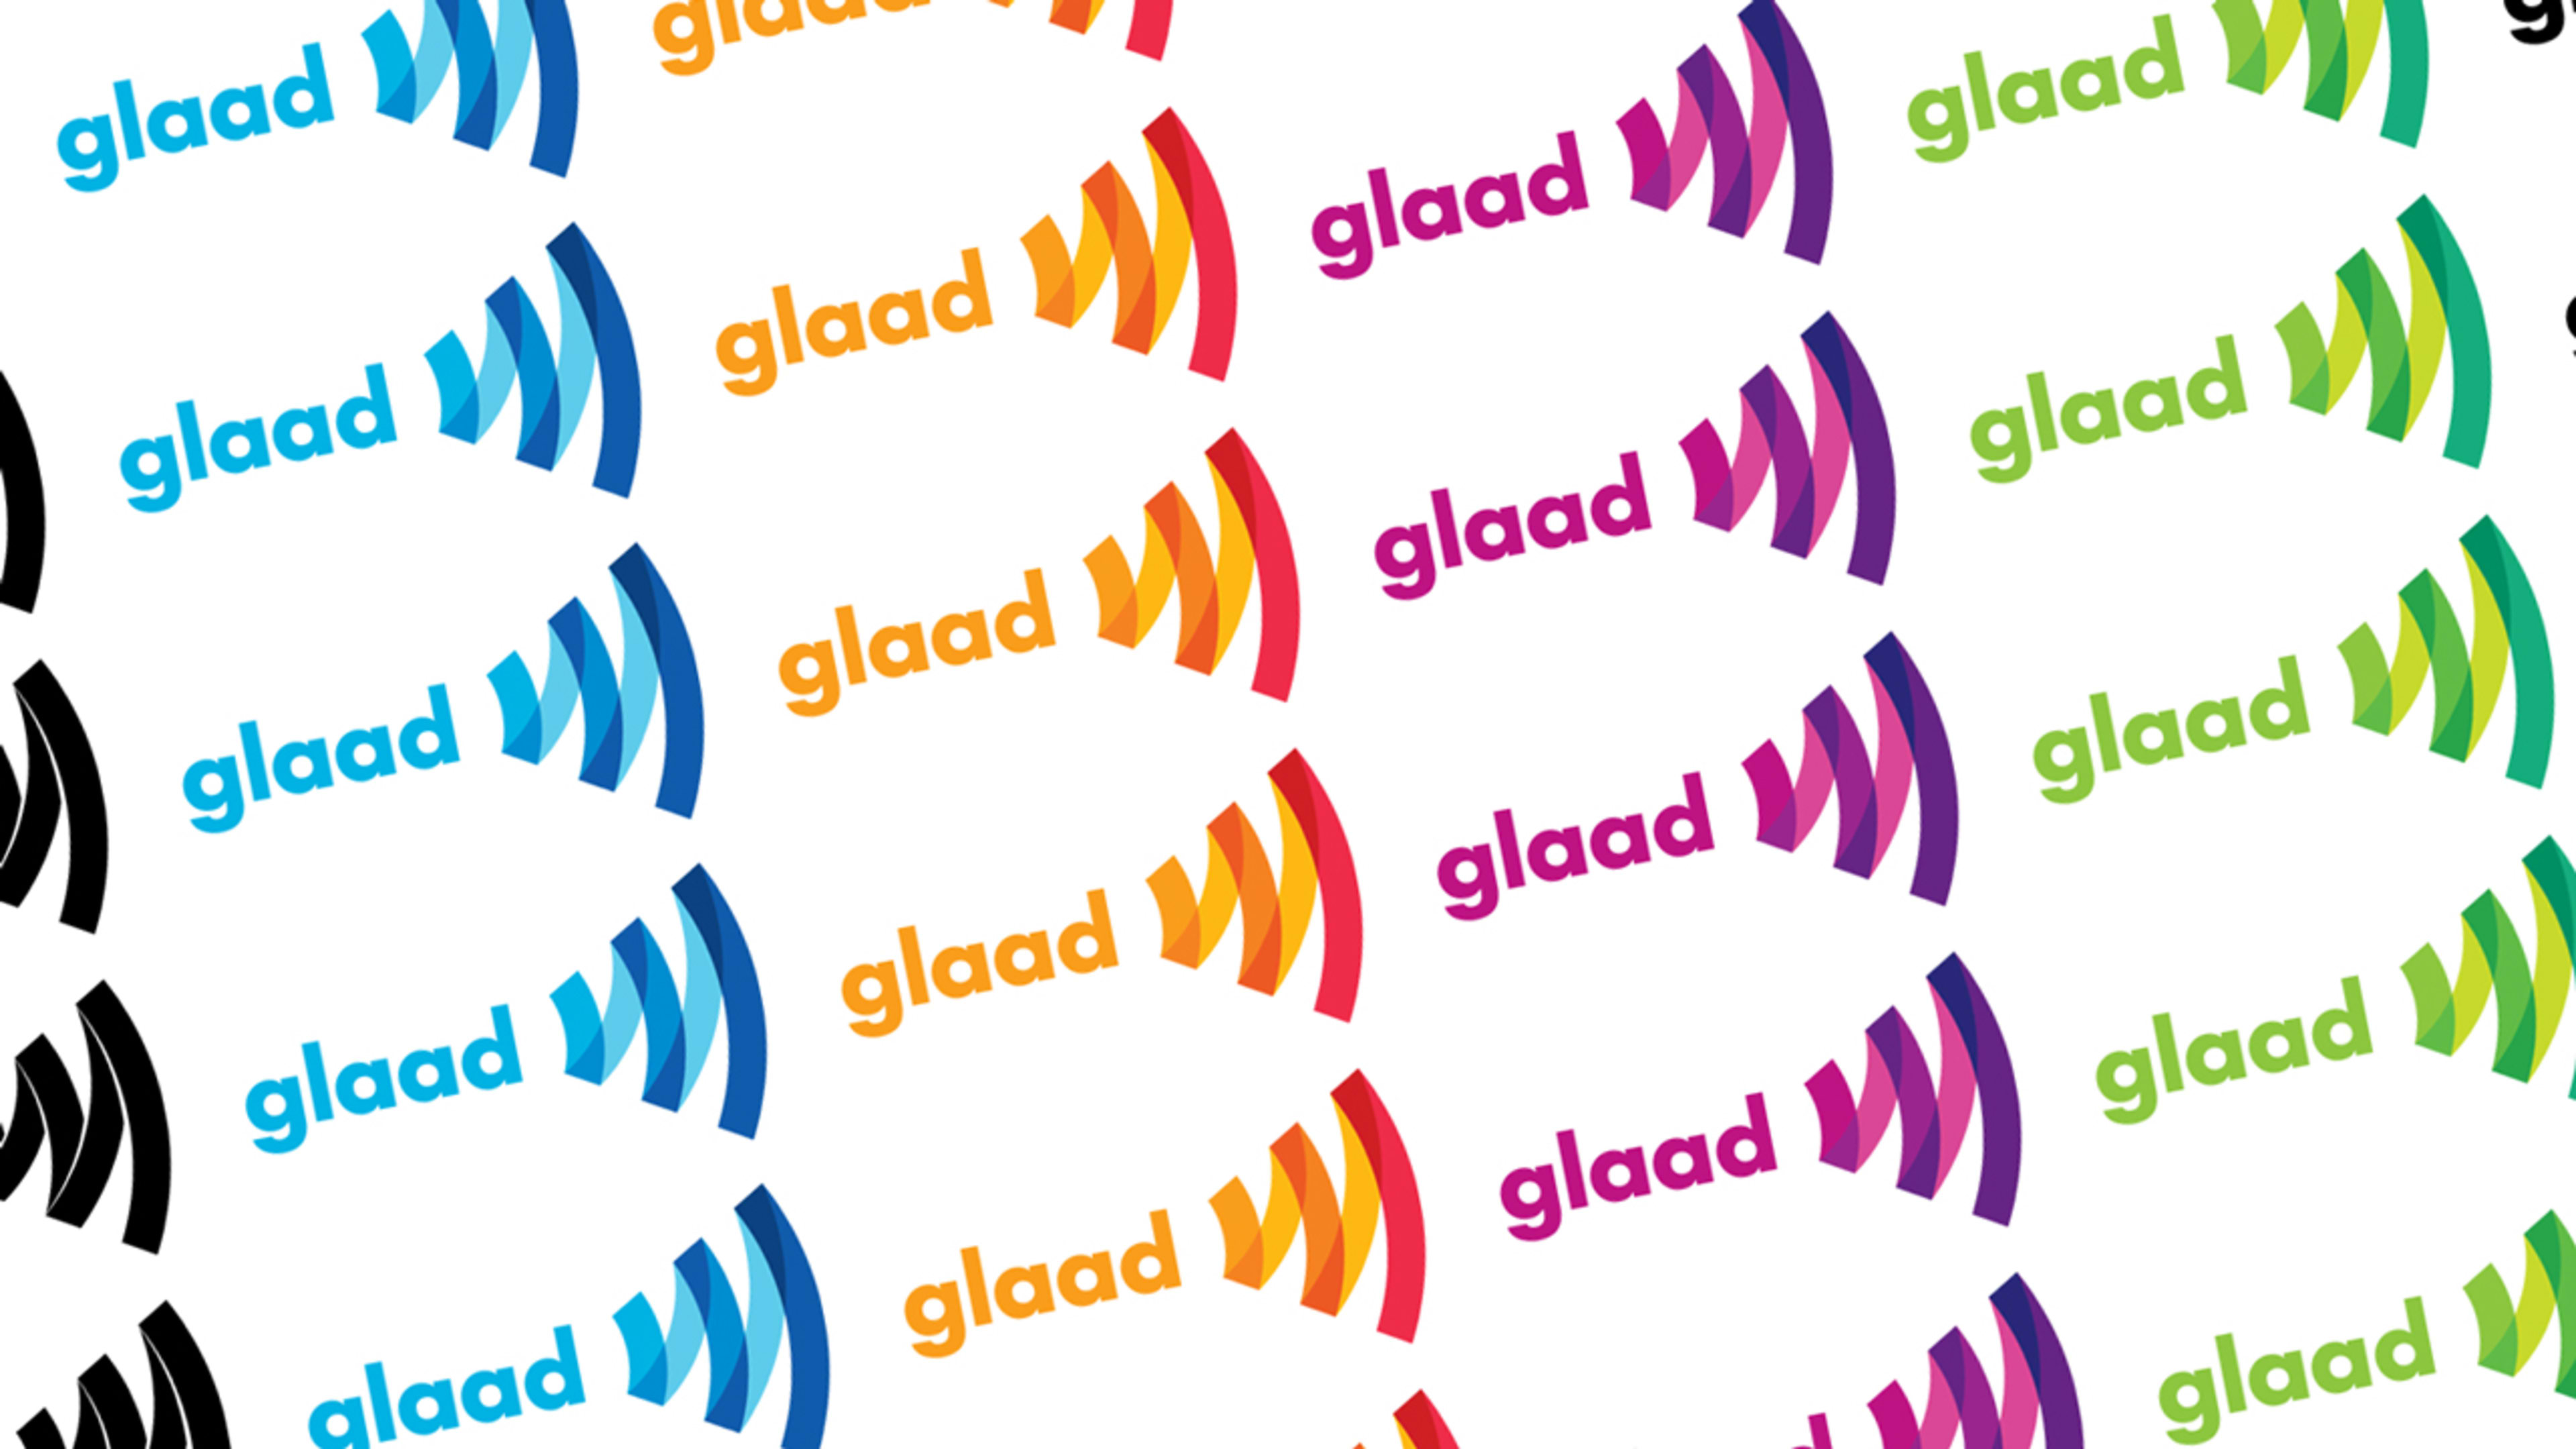 Studios fail with LGBTQ representation in 2017, GLAAD reports